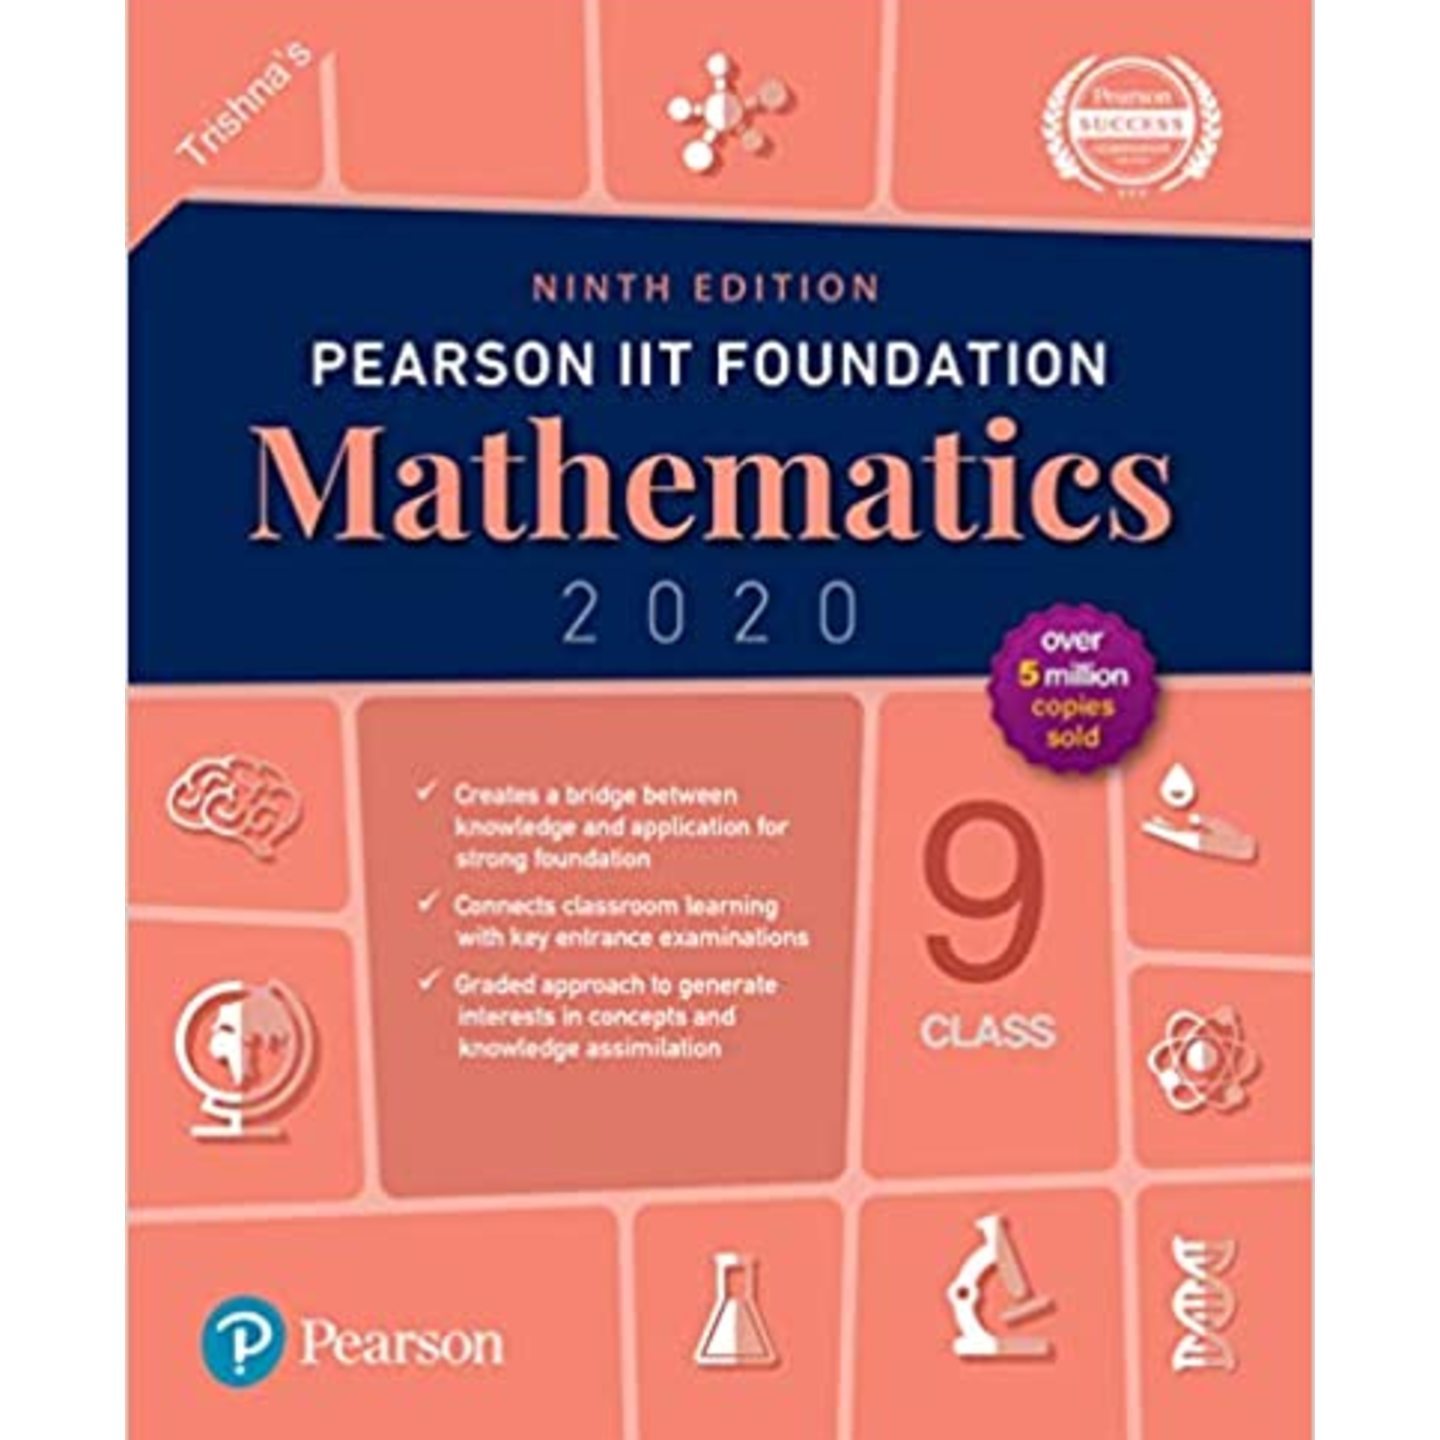 Pearson IIT Foundation Series Class 9 Mathematics